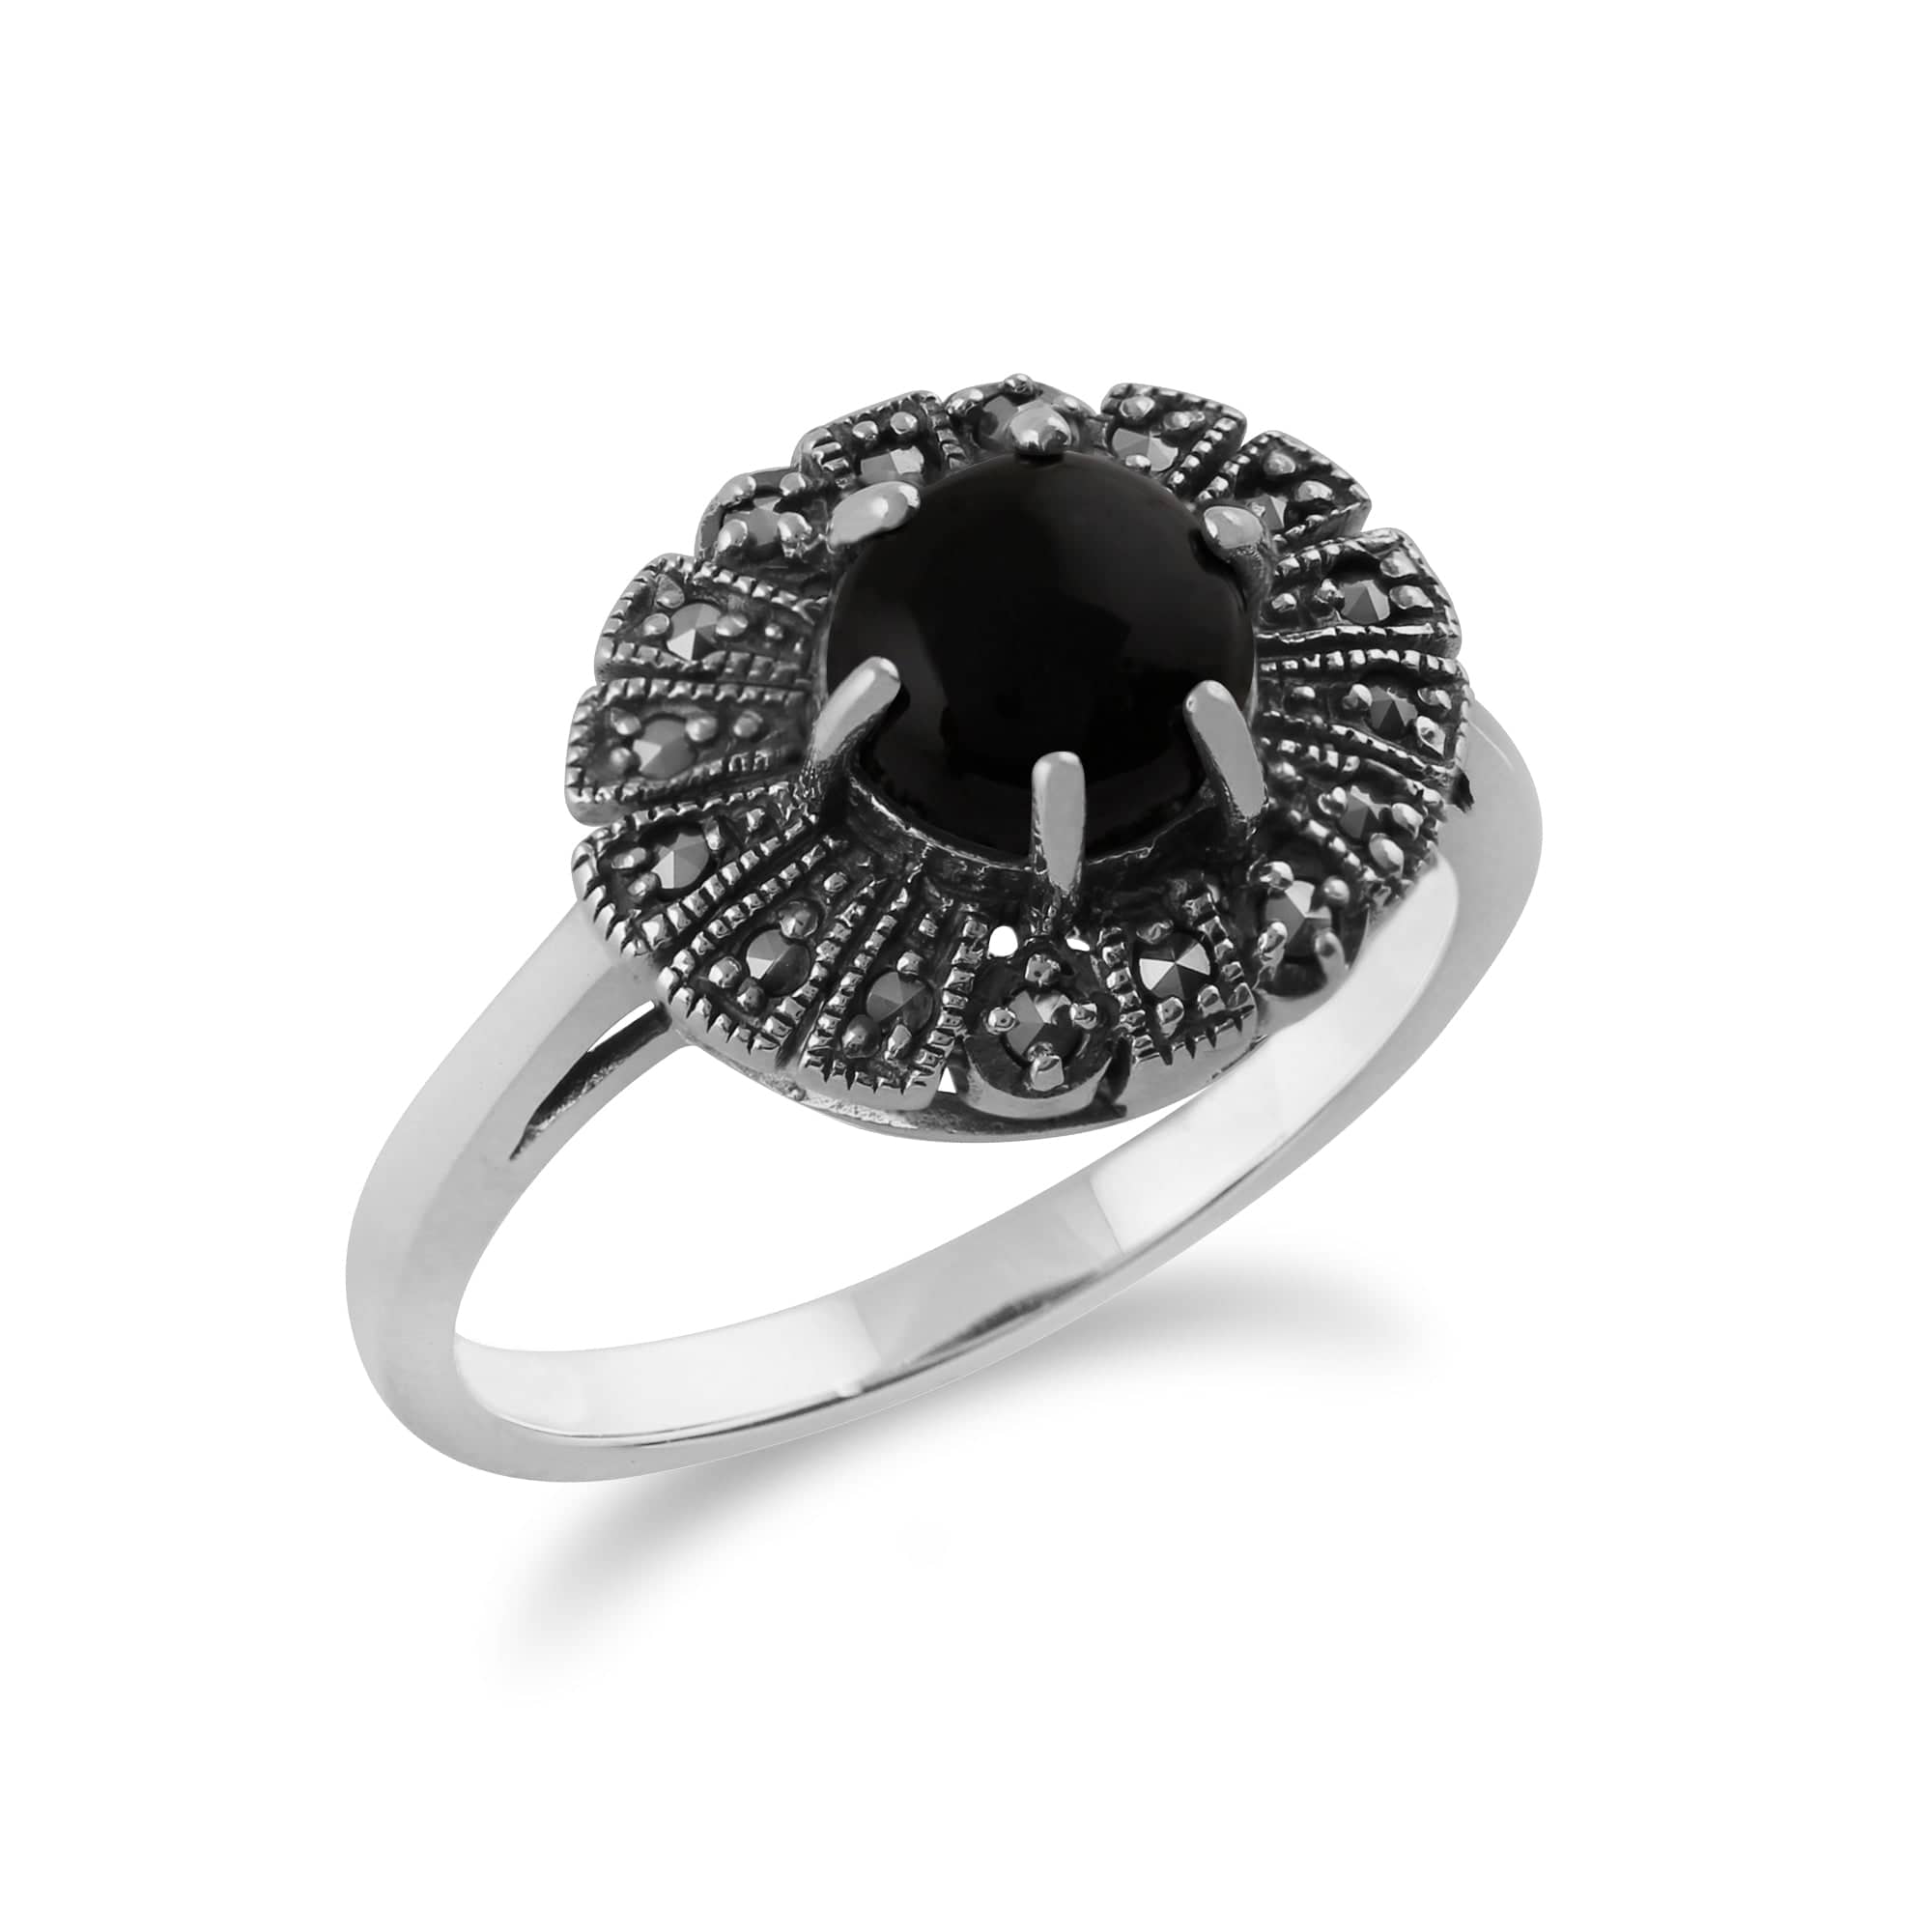 Gemondo 925 Sterling Silver 0.75ct Black Onyx & Marcasite Art Deco Ring Image 2